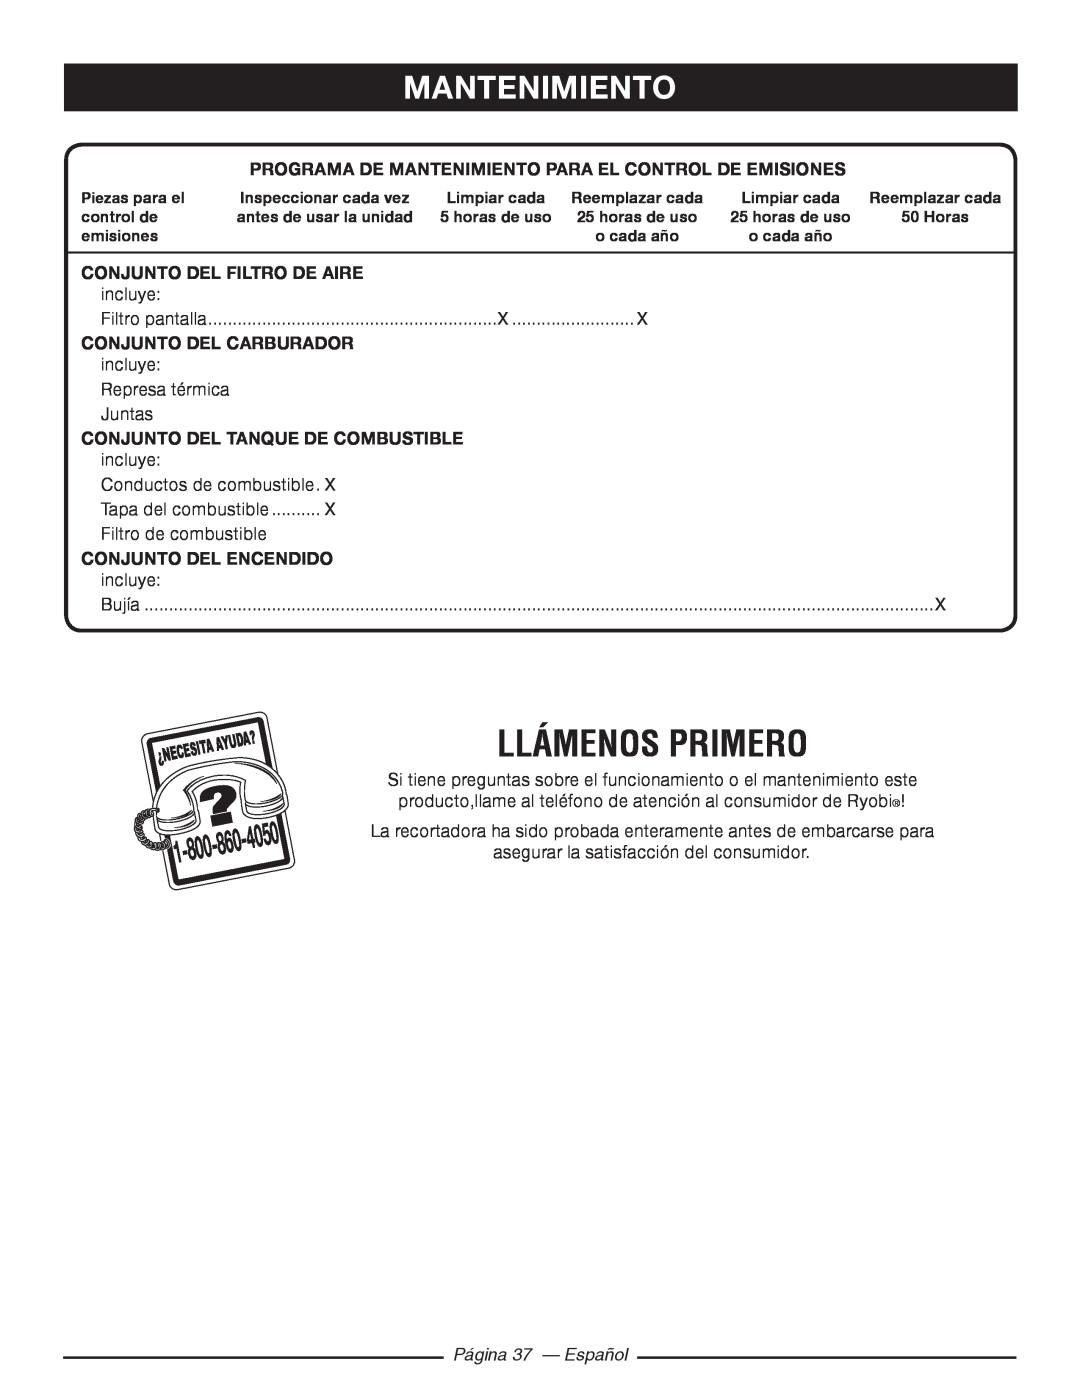 Ryobi RY10518, RY10520 manuel dutilisation Llámenos Primero, Mantenimiento, Página 37 - Español 